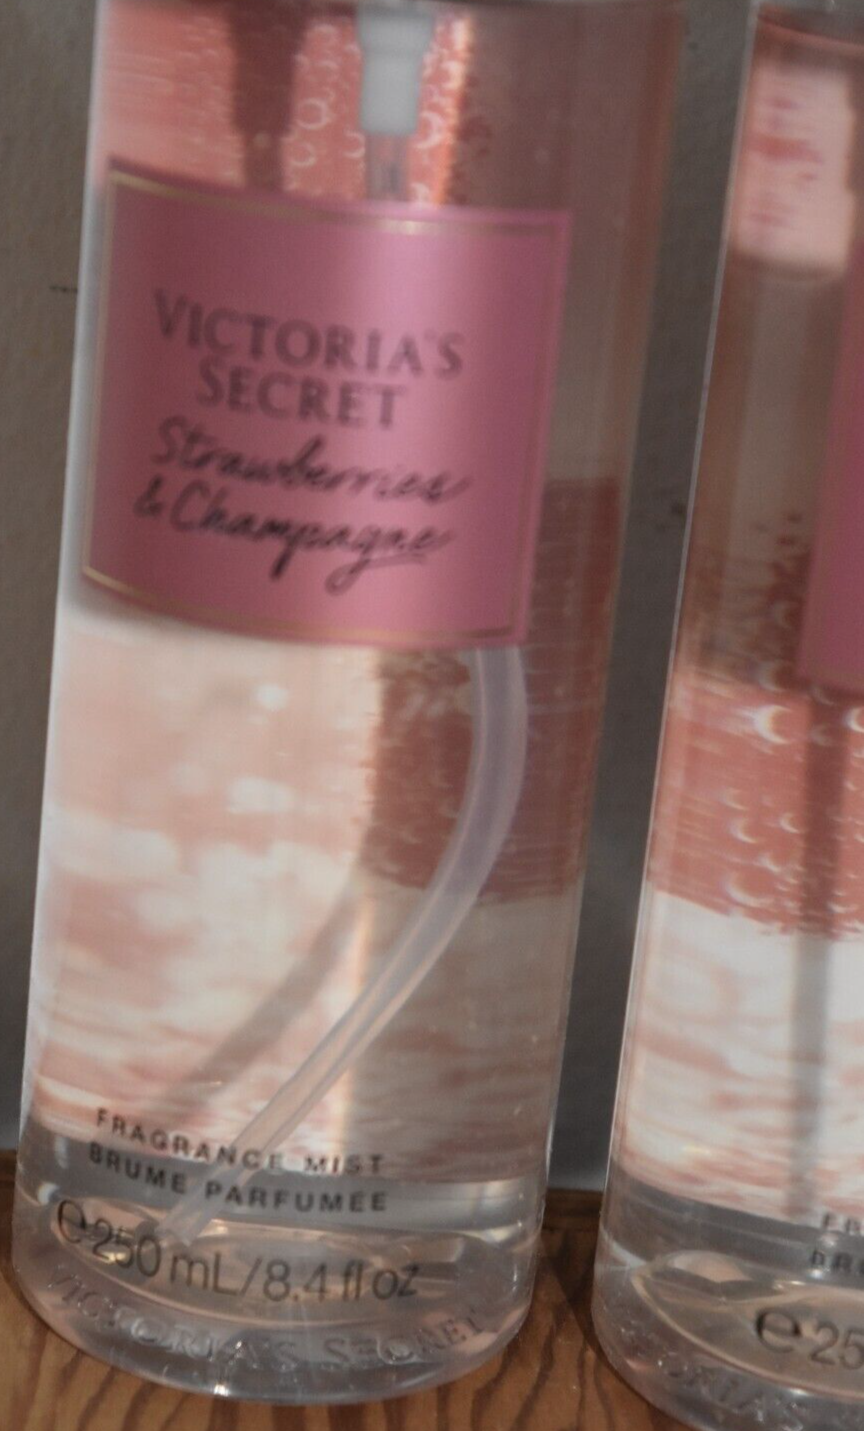 2 New Victoria's Secret Strawberries & Champagne Body Mist Lot Free Shipping VICTORIA'S SECRET 26546829 - фотография #8